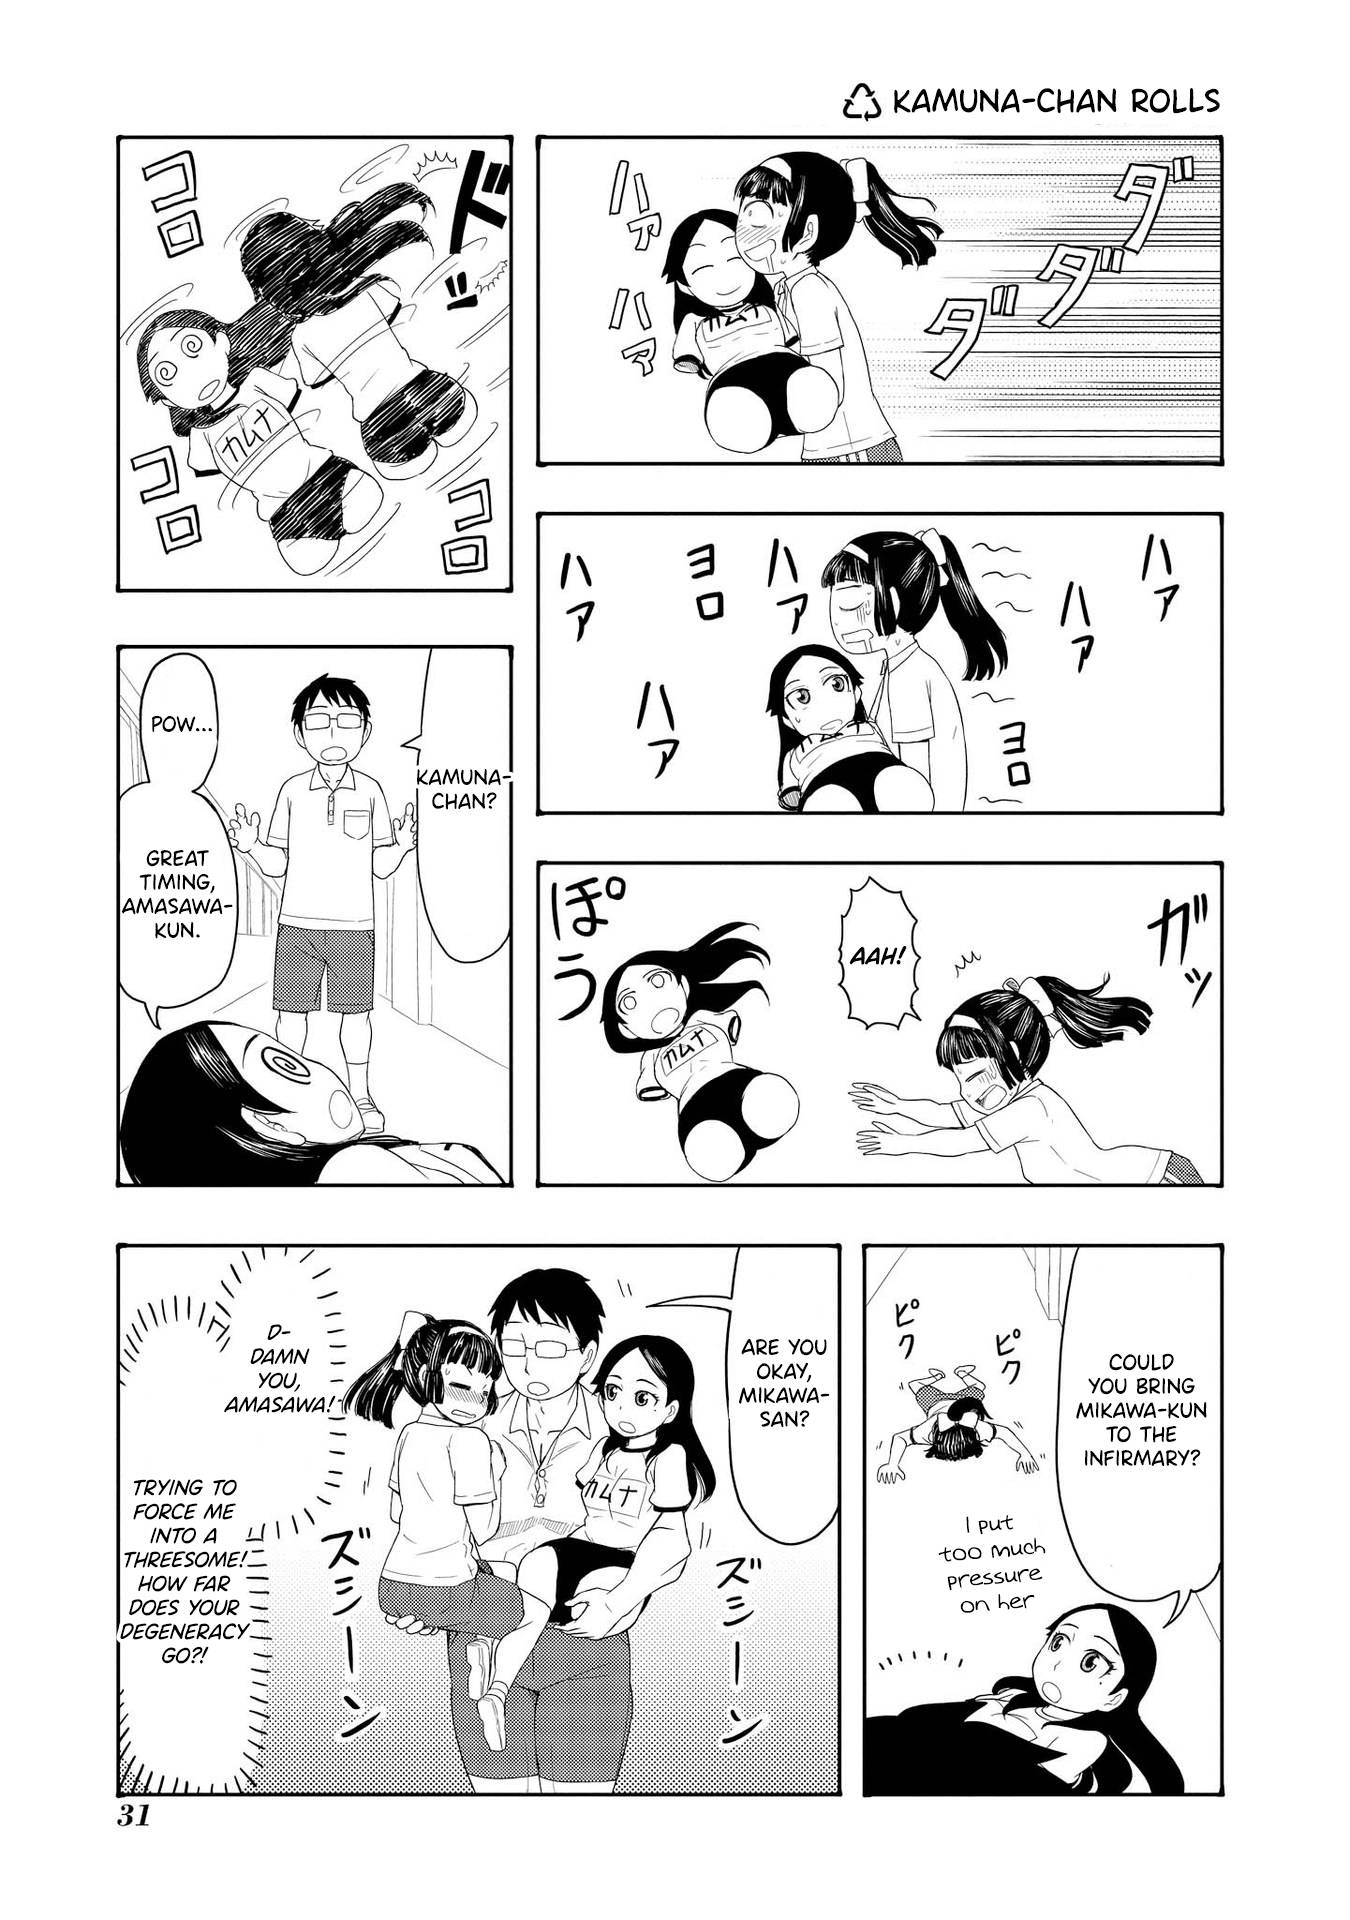 Amasawa-kun and Kamuna-chan - chapter 21 - #1